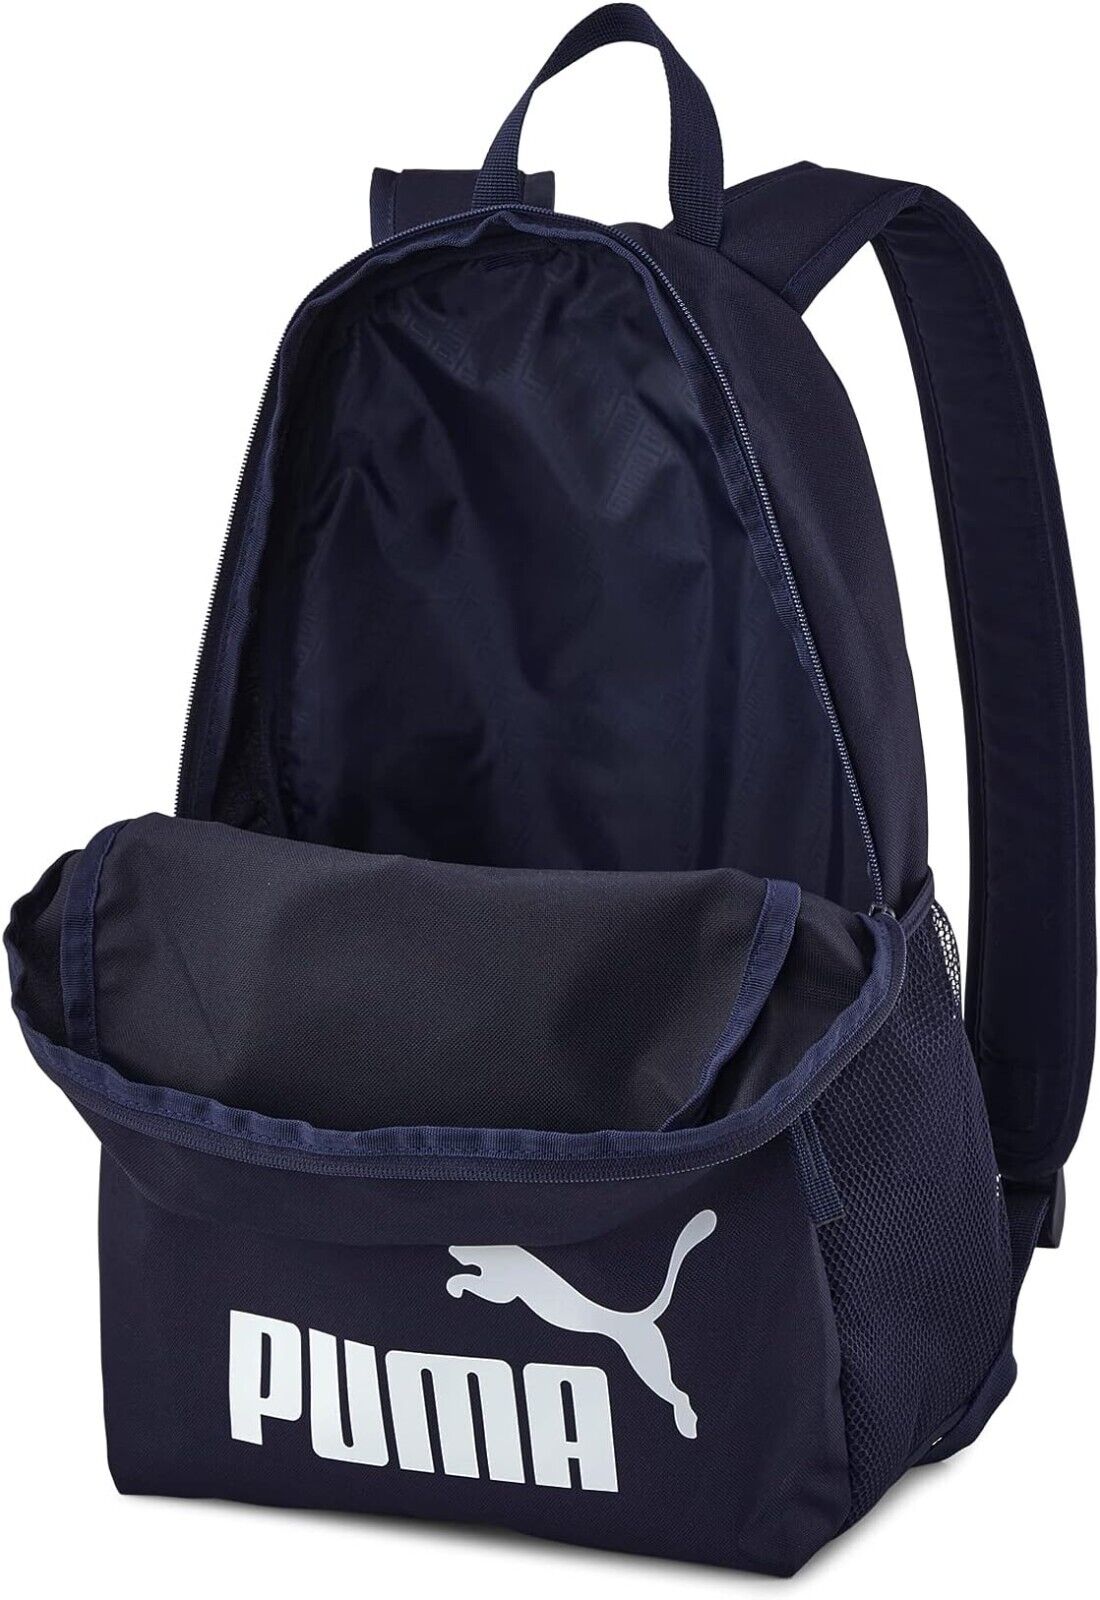 PUMA 75487 Unisex-Adult Phase Backpack Rucksack Herren Marineblau NEU